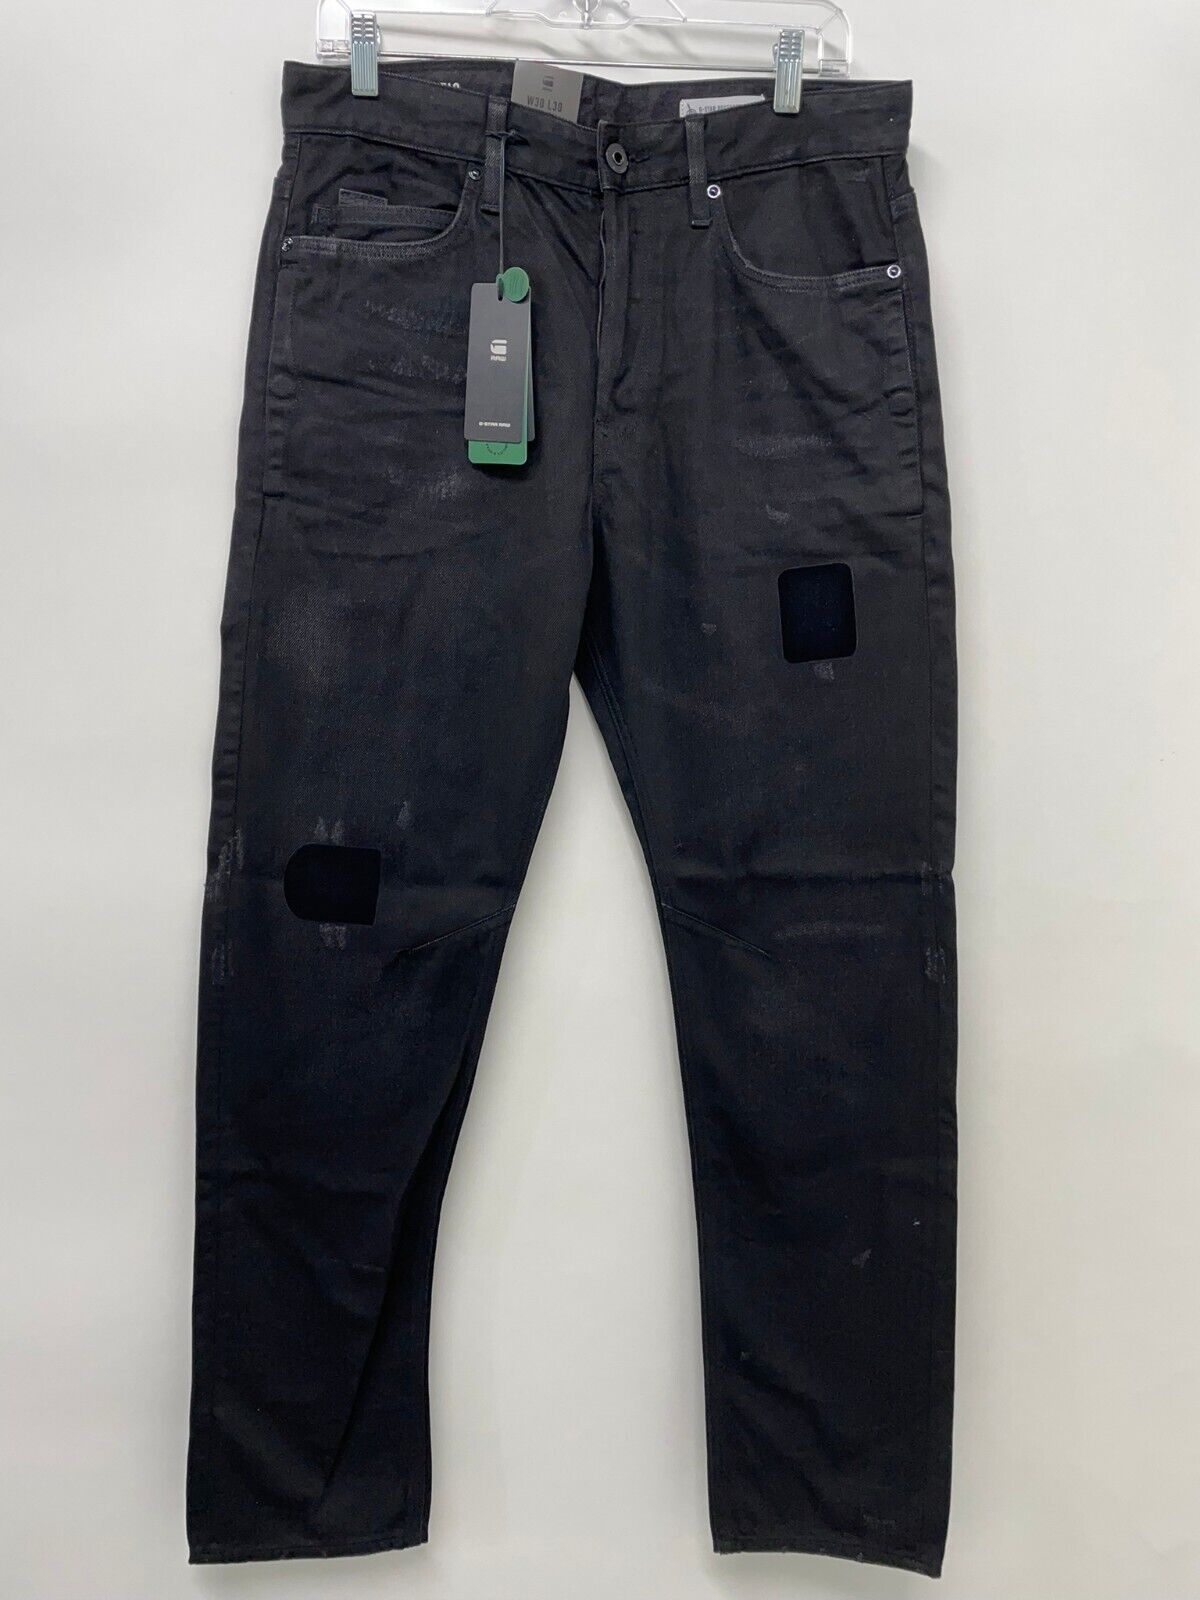 G Star Denim Mens 30x30 A-Staq Tapered Jet Black Rescue Patch Restored Jeans 32